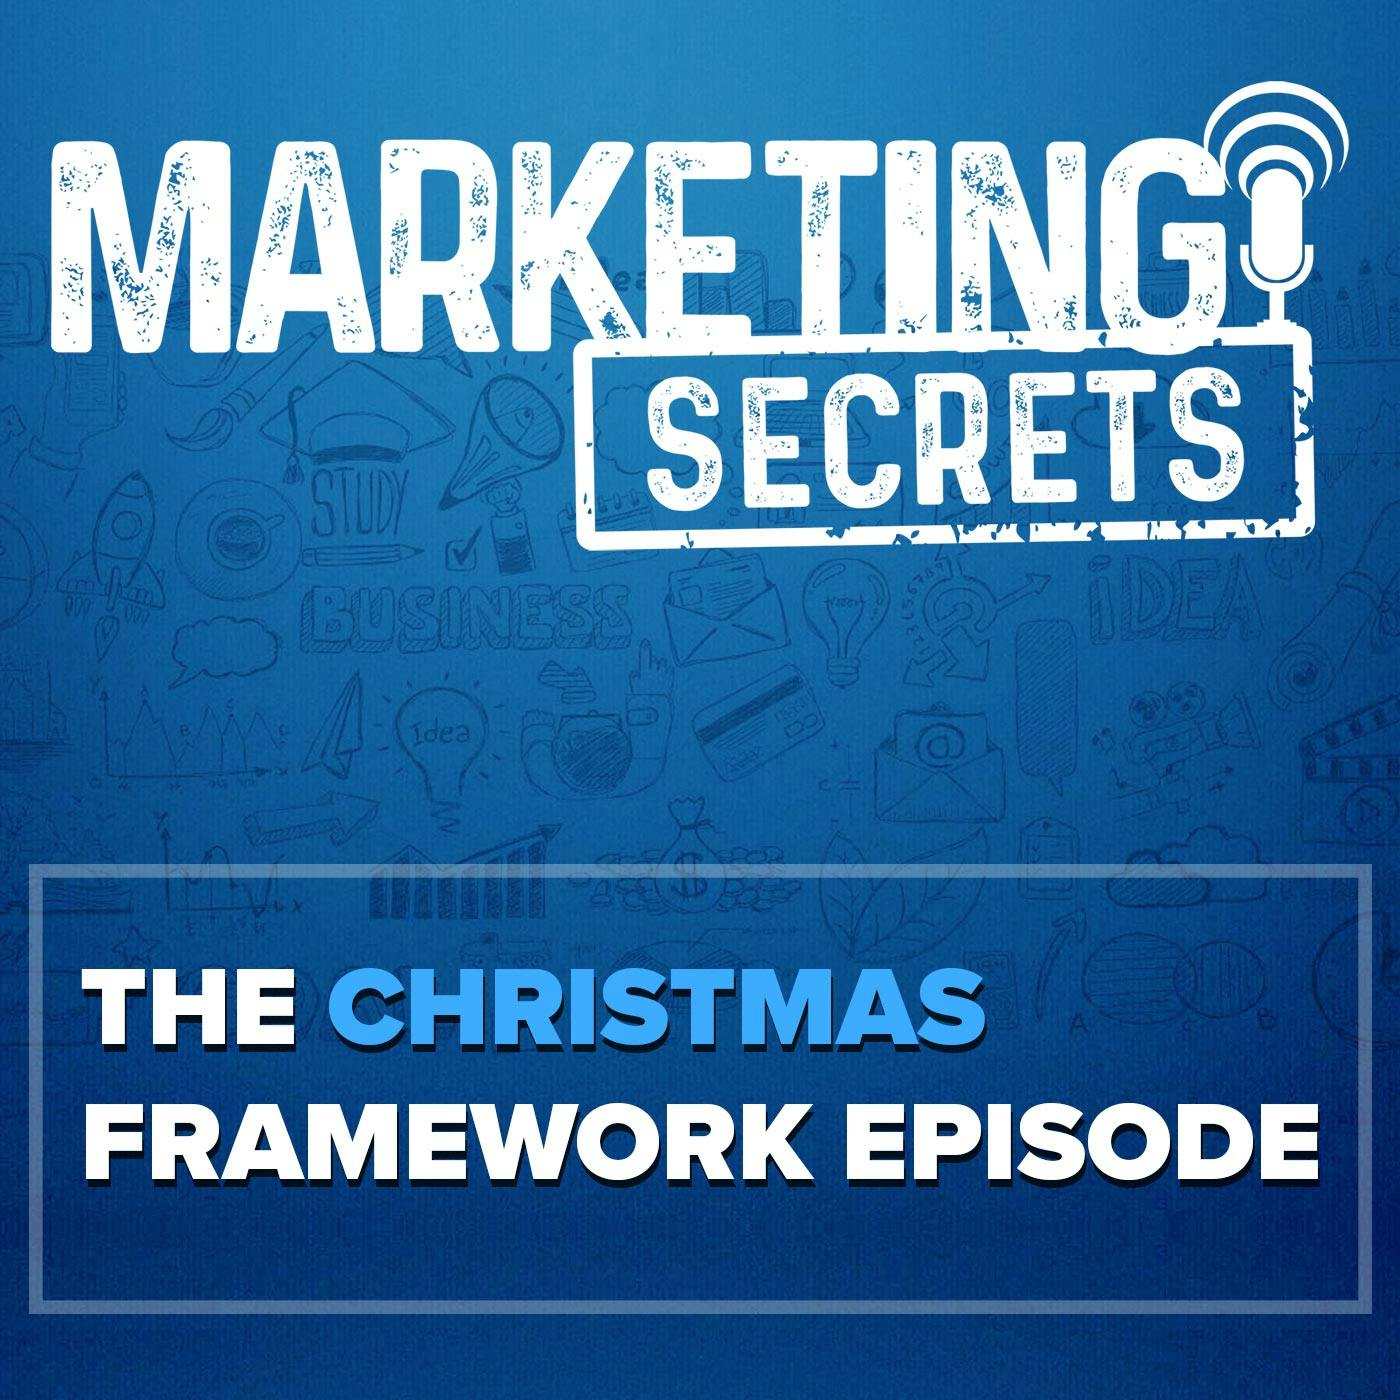 The Christmas Framework Episode